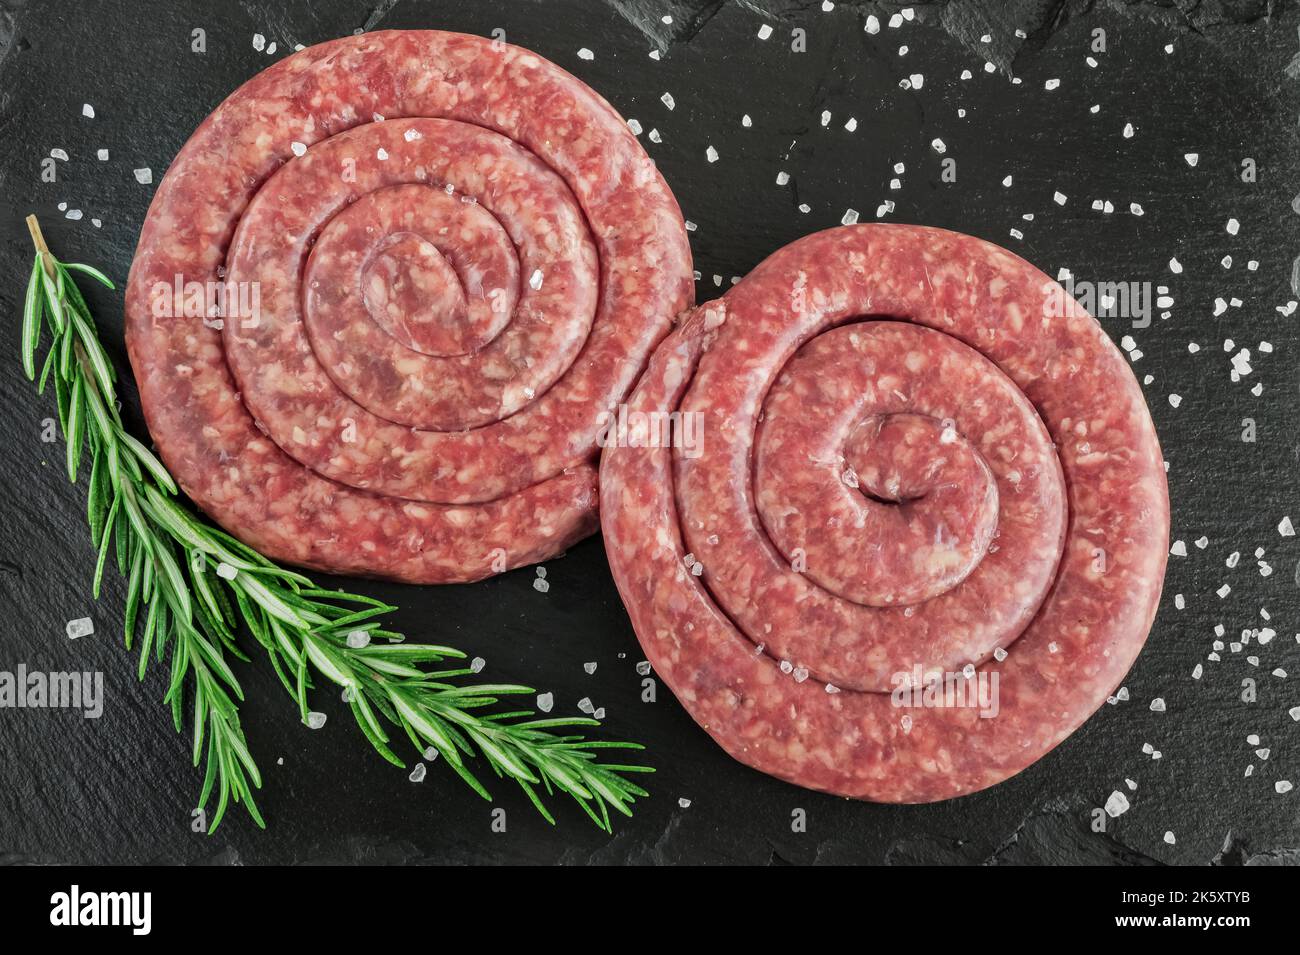 Spiral pork sausage on black board Stock Photo